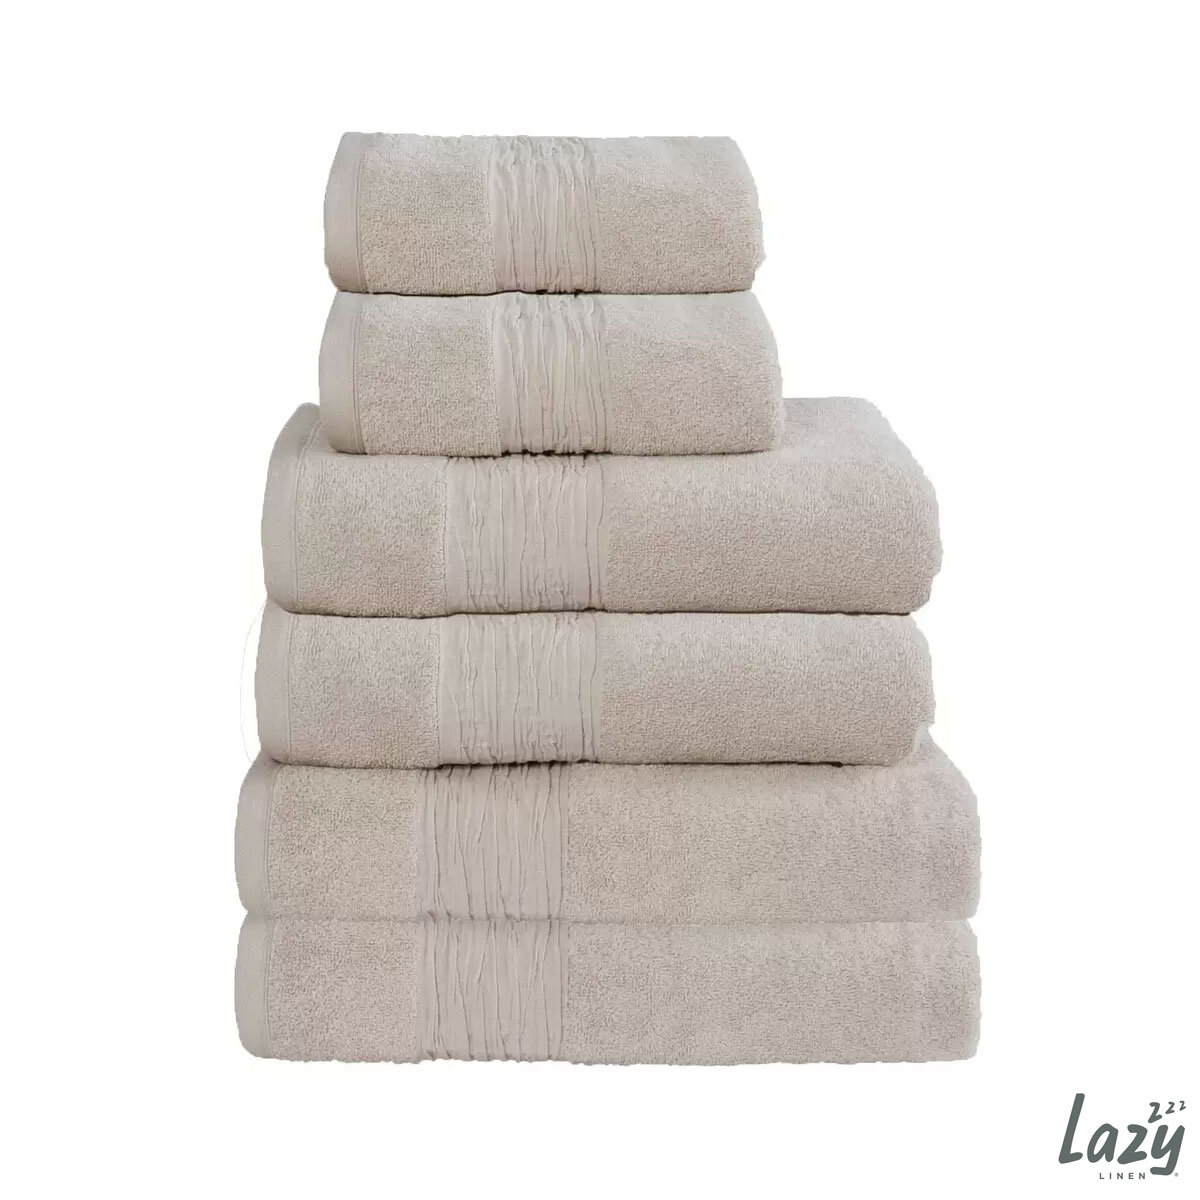 Lazy Linen 6 Piece Towel Bundle in Cream, 2 x Hand Towels, 2 x Bath Towels & 2 x Bath Sheets